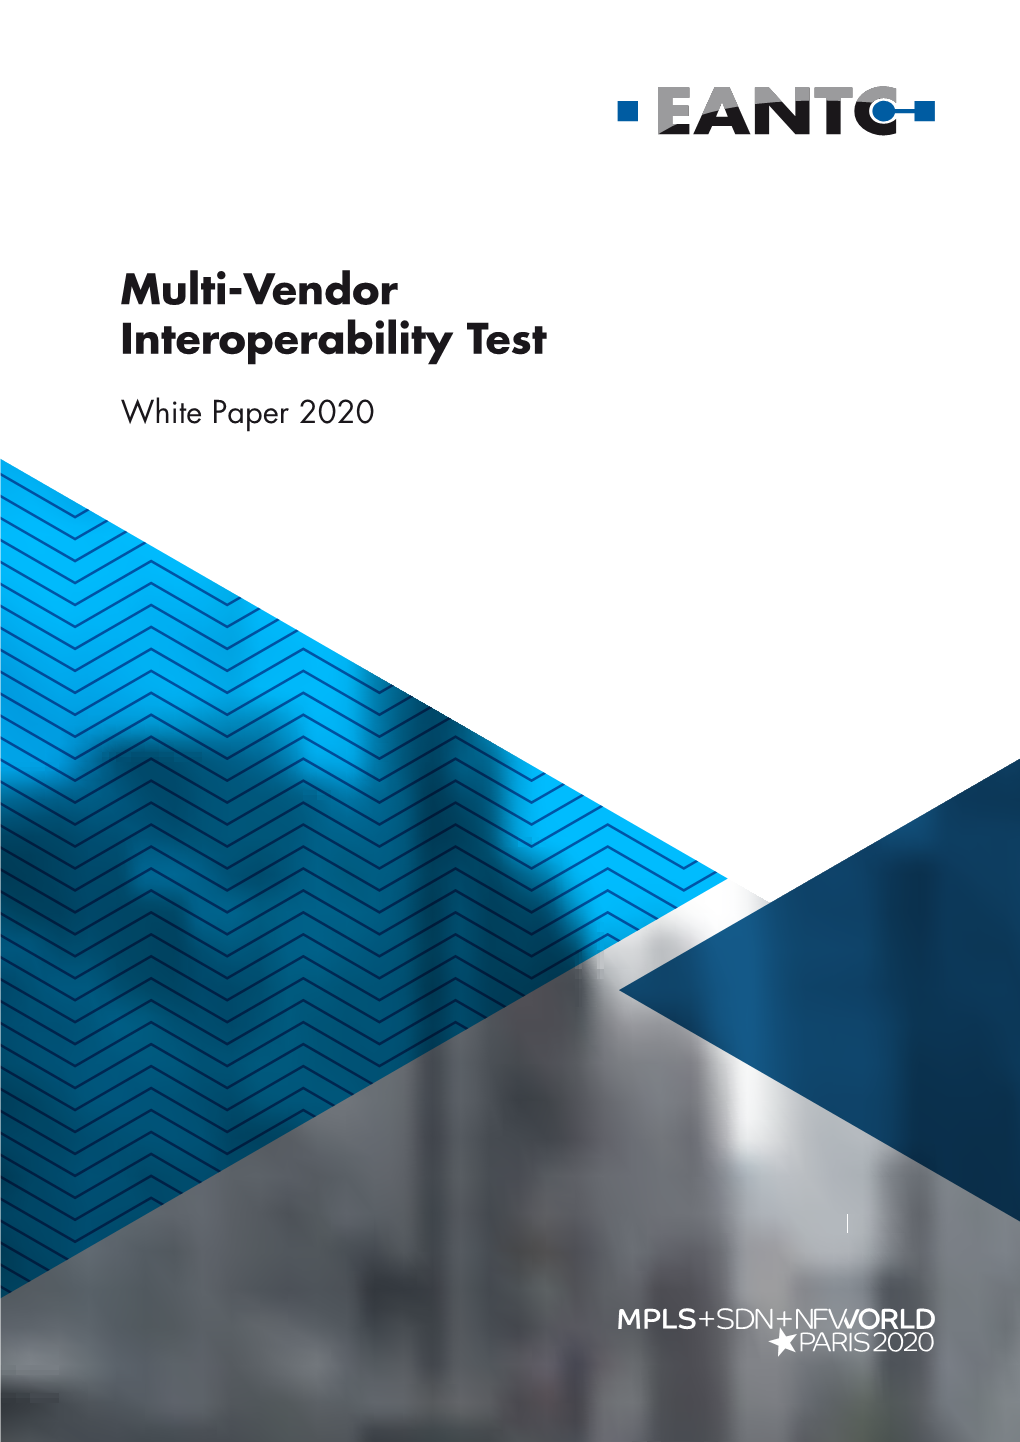 Multi-Vendor Interoperability Test 2020 Multi-Vendor Interoperability Test 2020